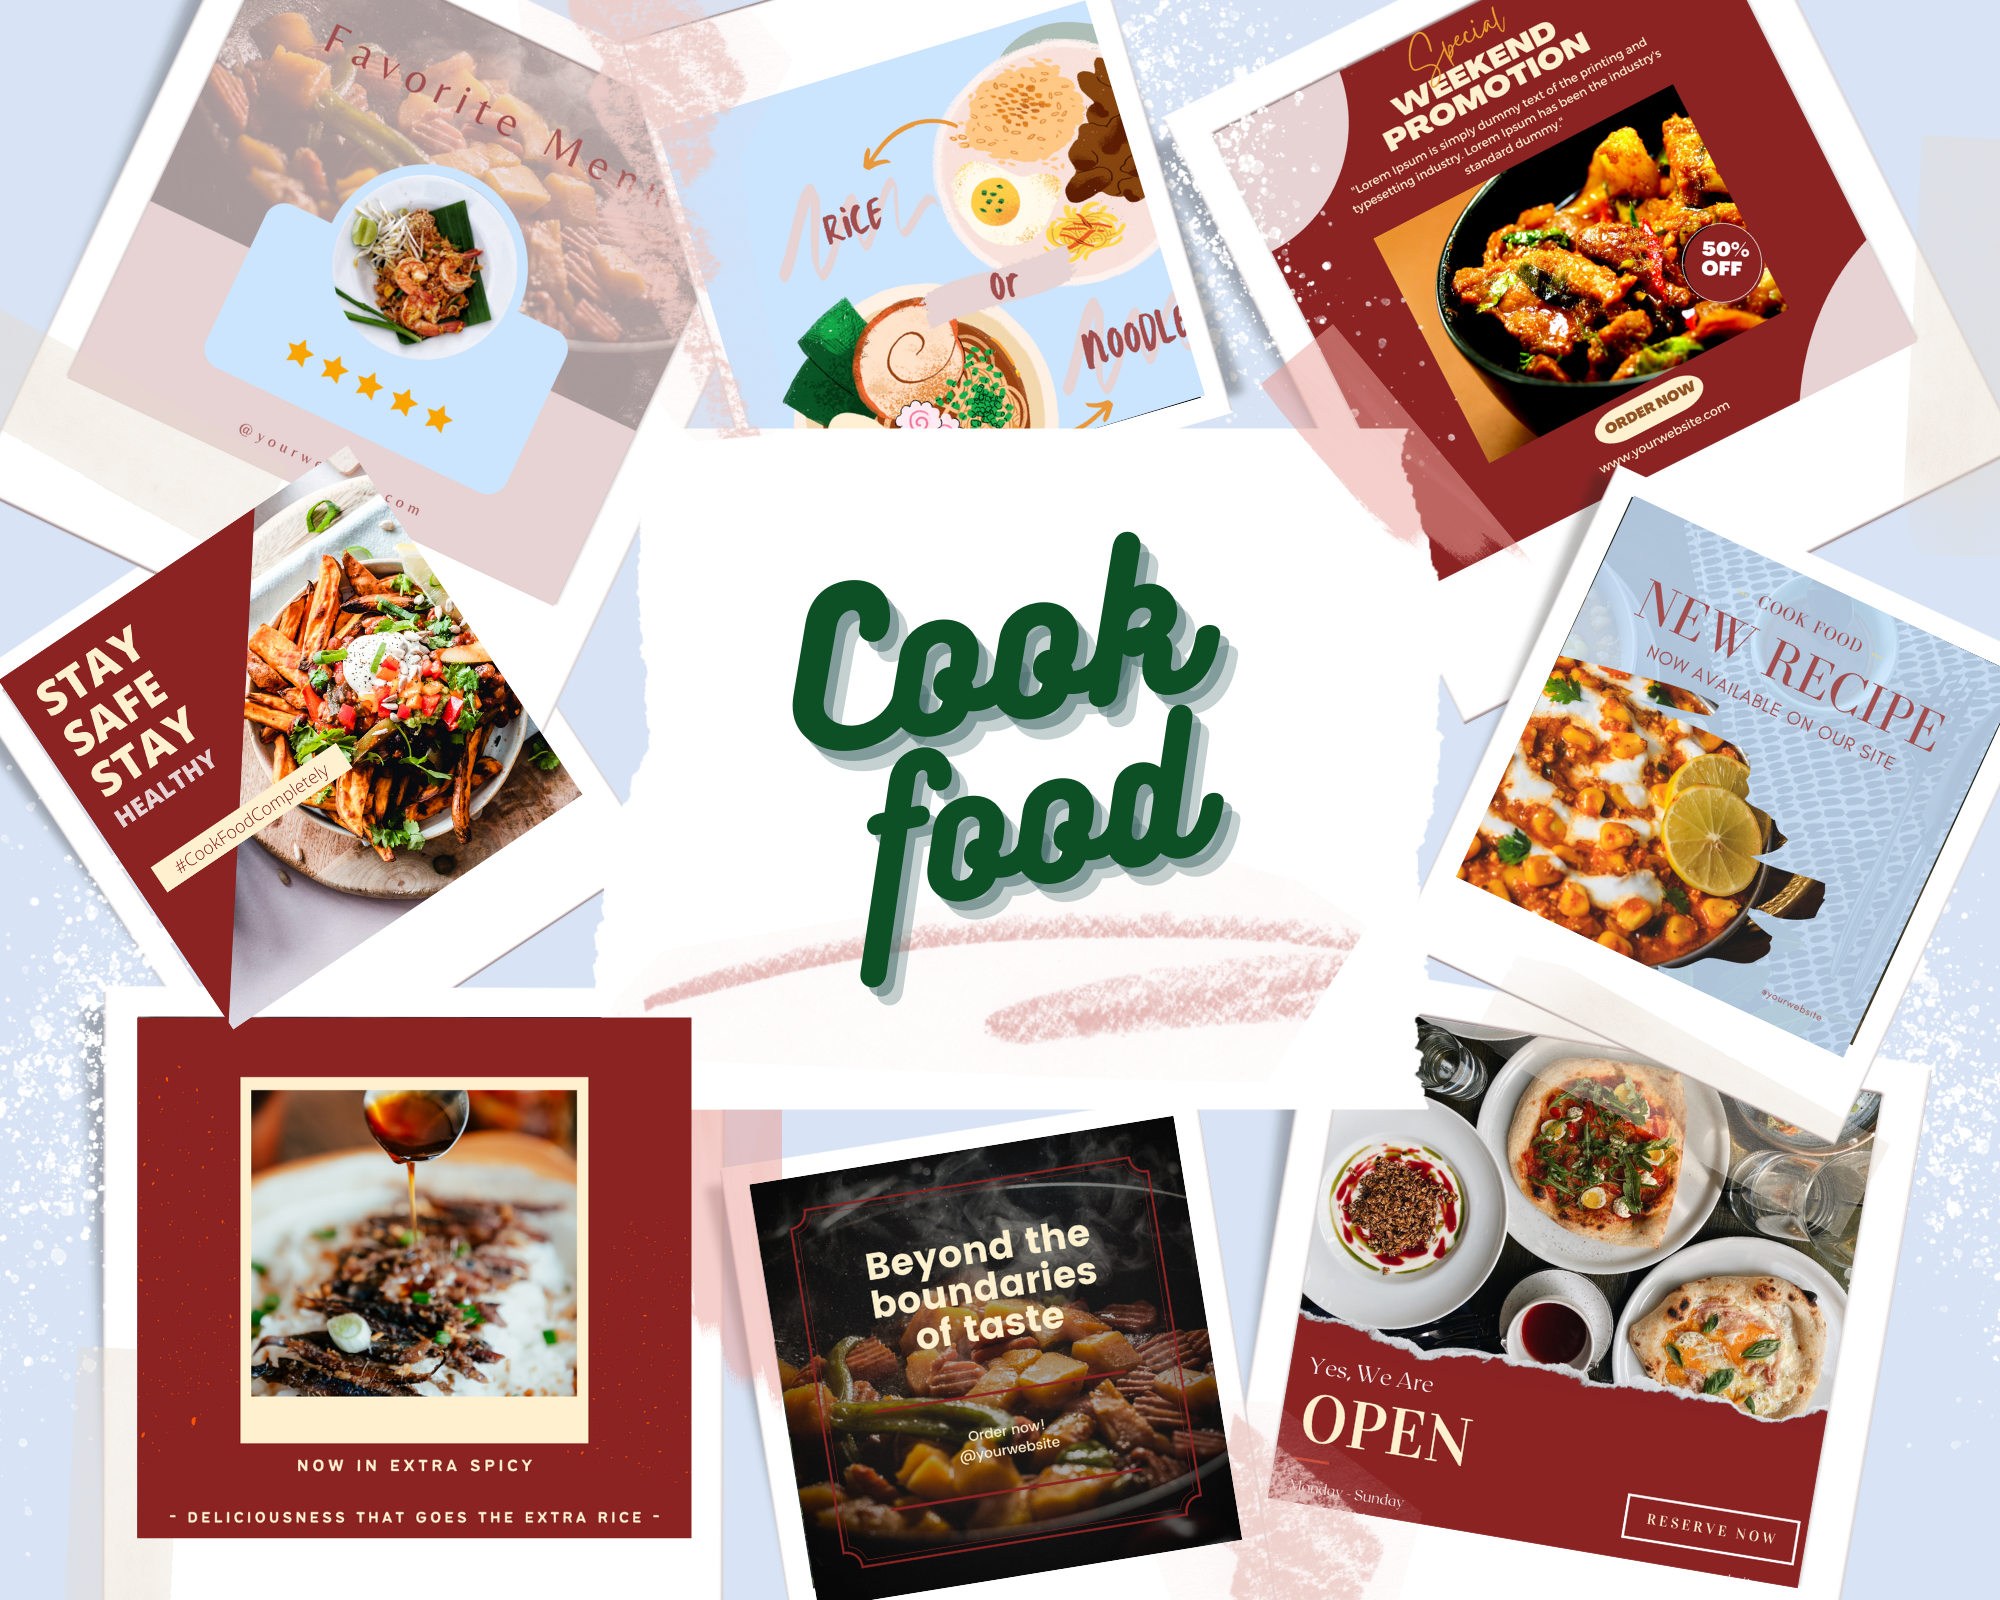 Cook food – whole year bundle